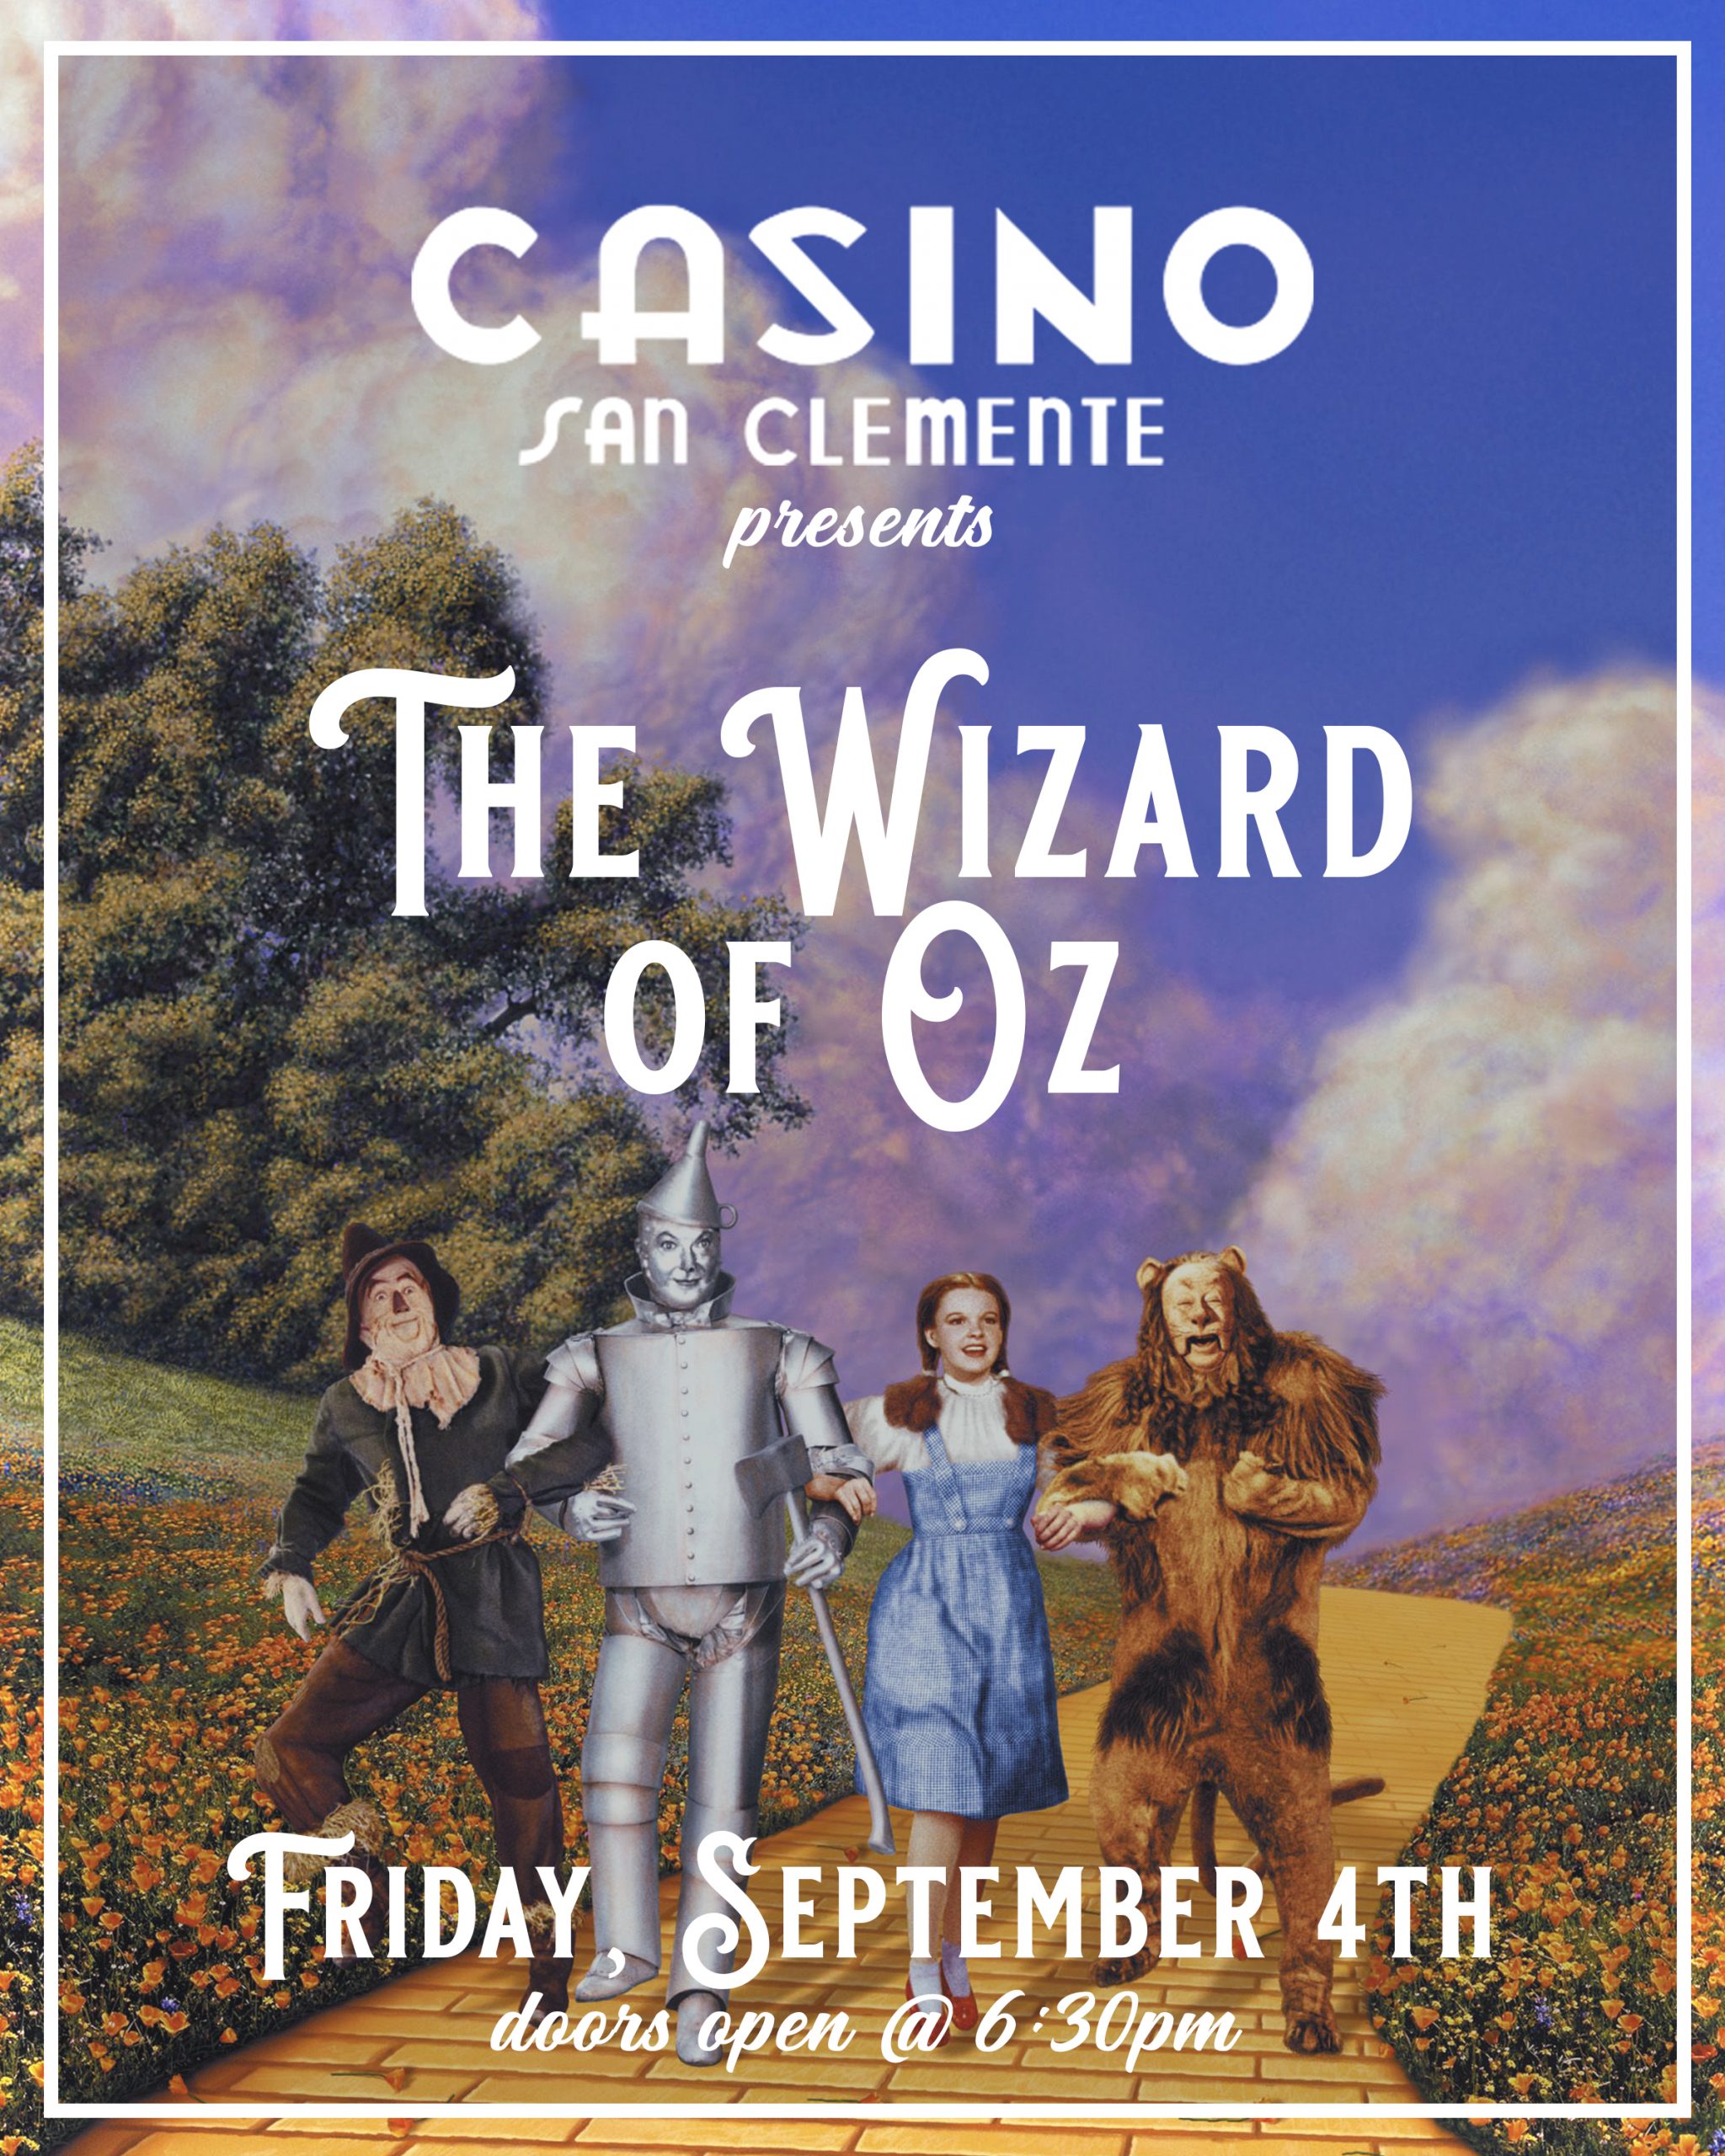 Wizard of oz casino game free online